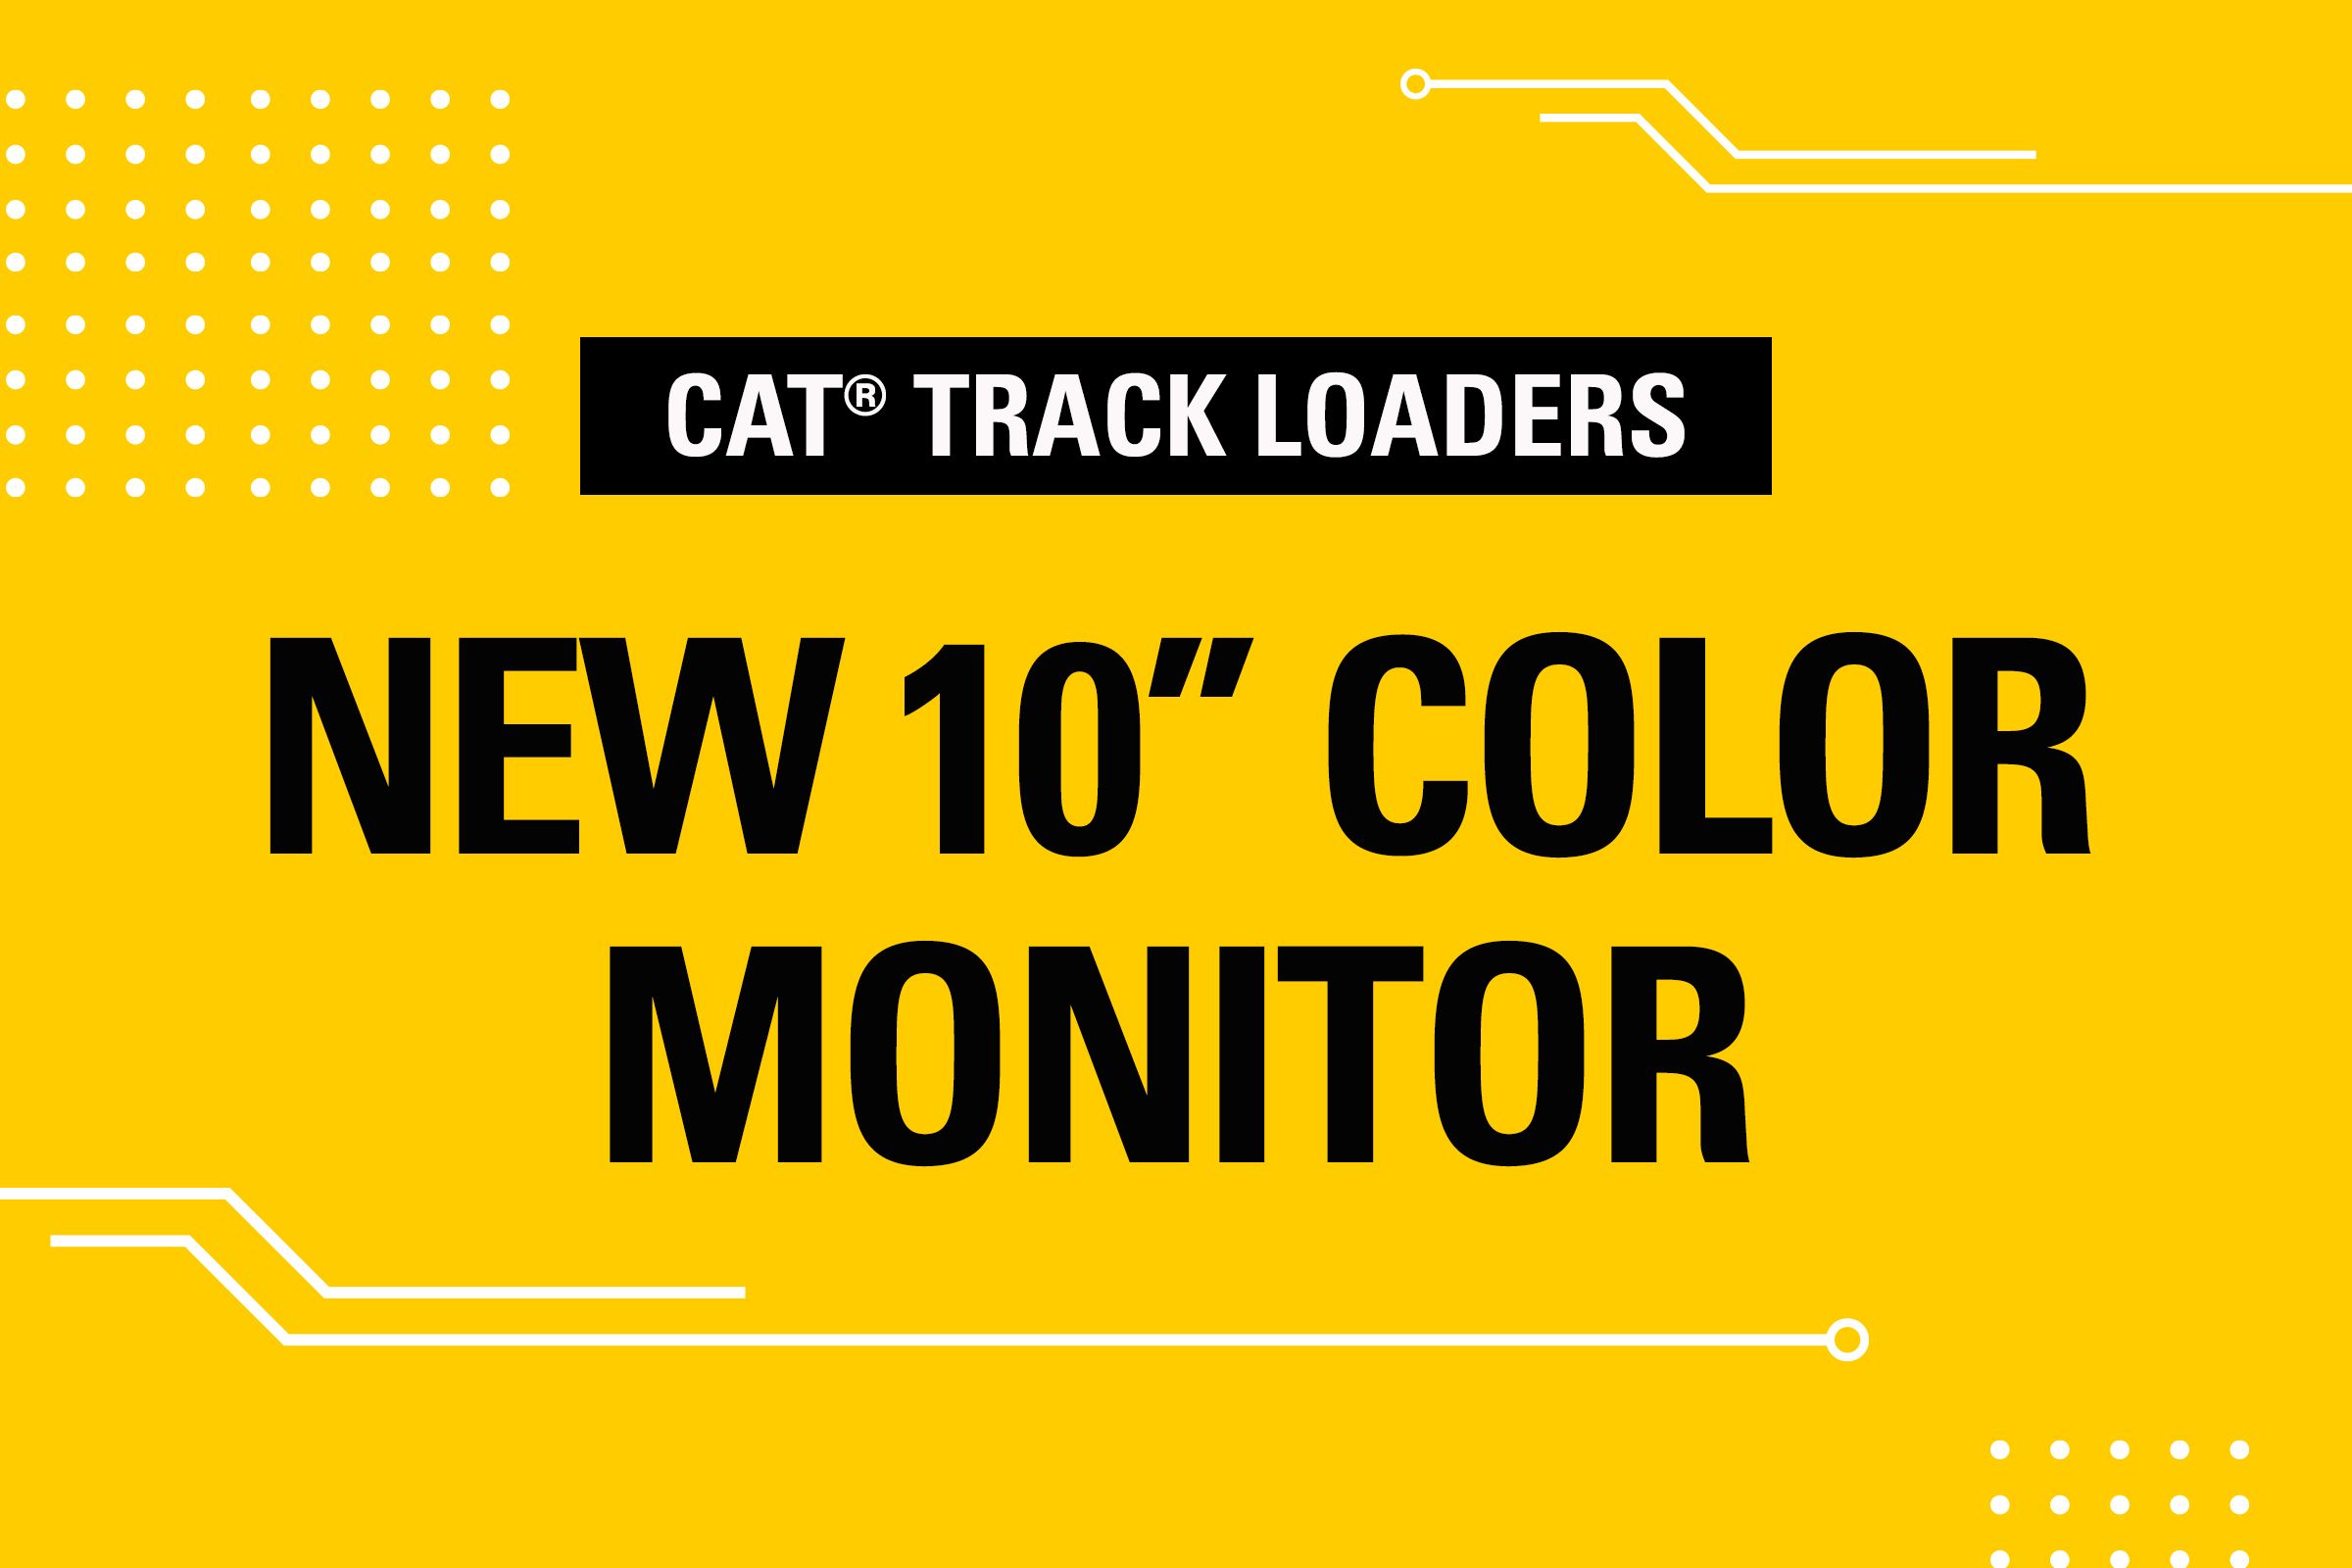 New 10" Color Monitor